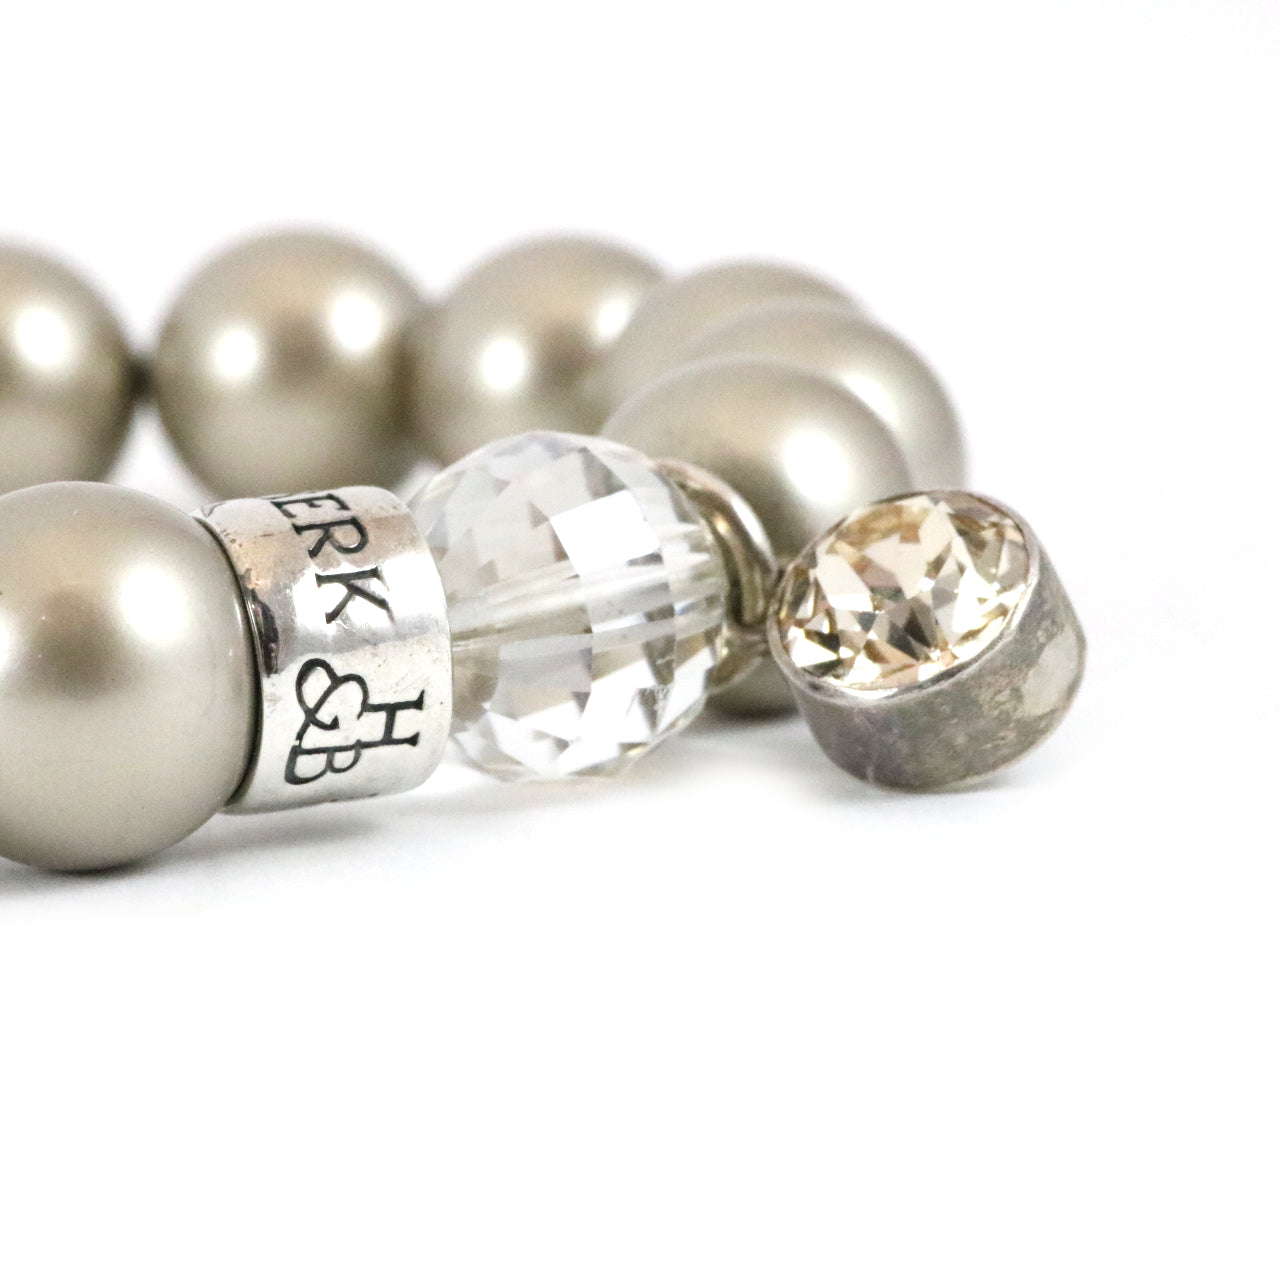 Pearl Necklace & Bracelet Set